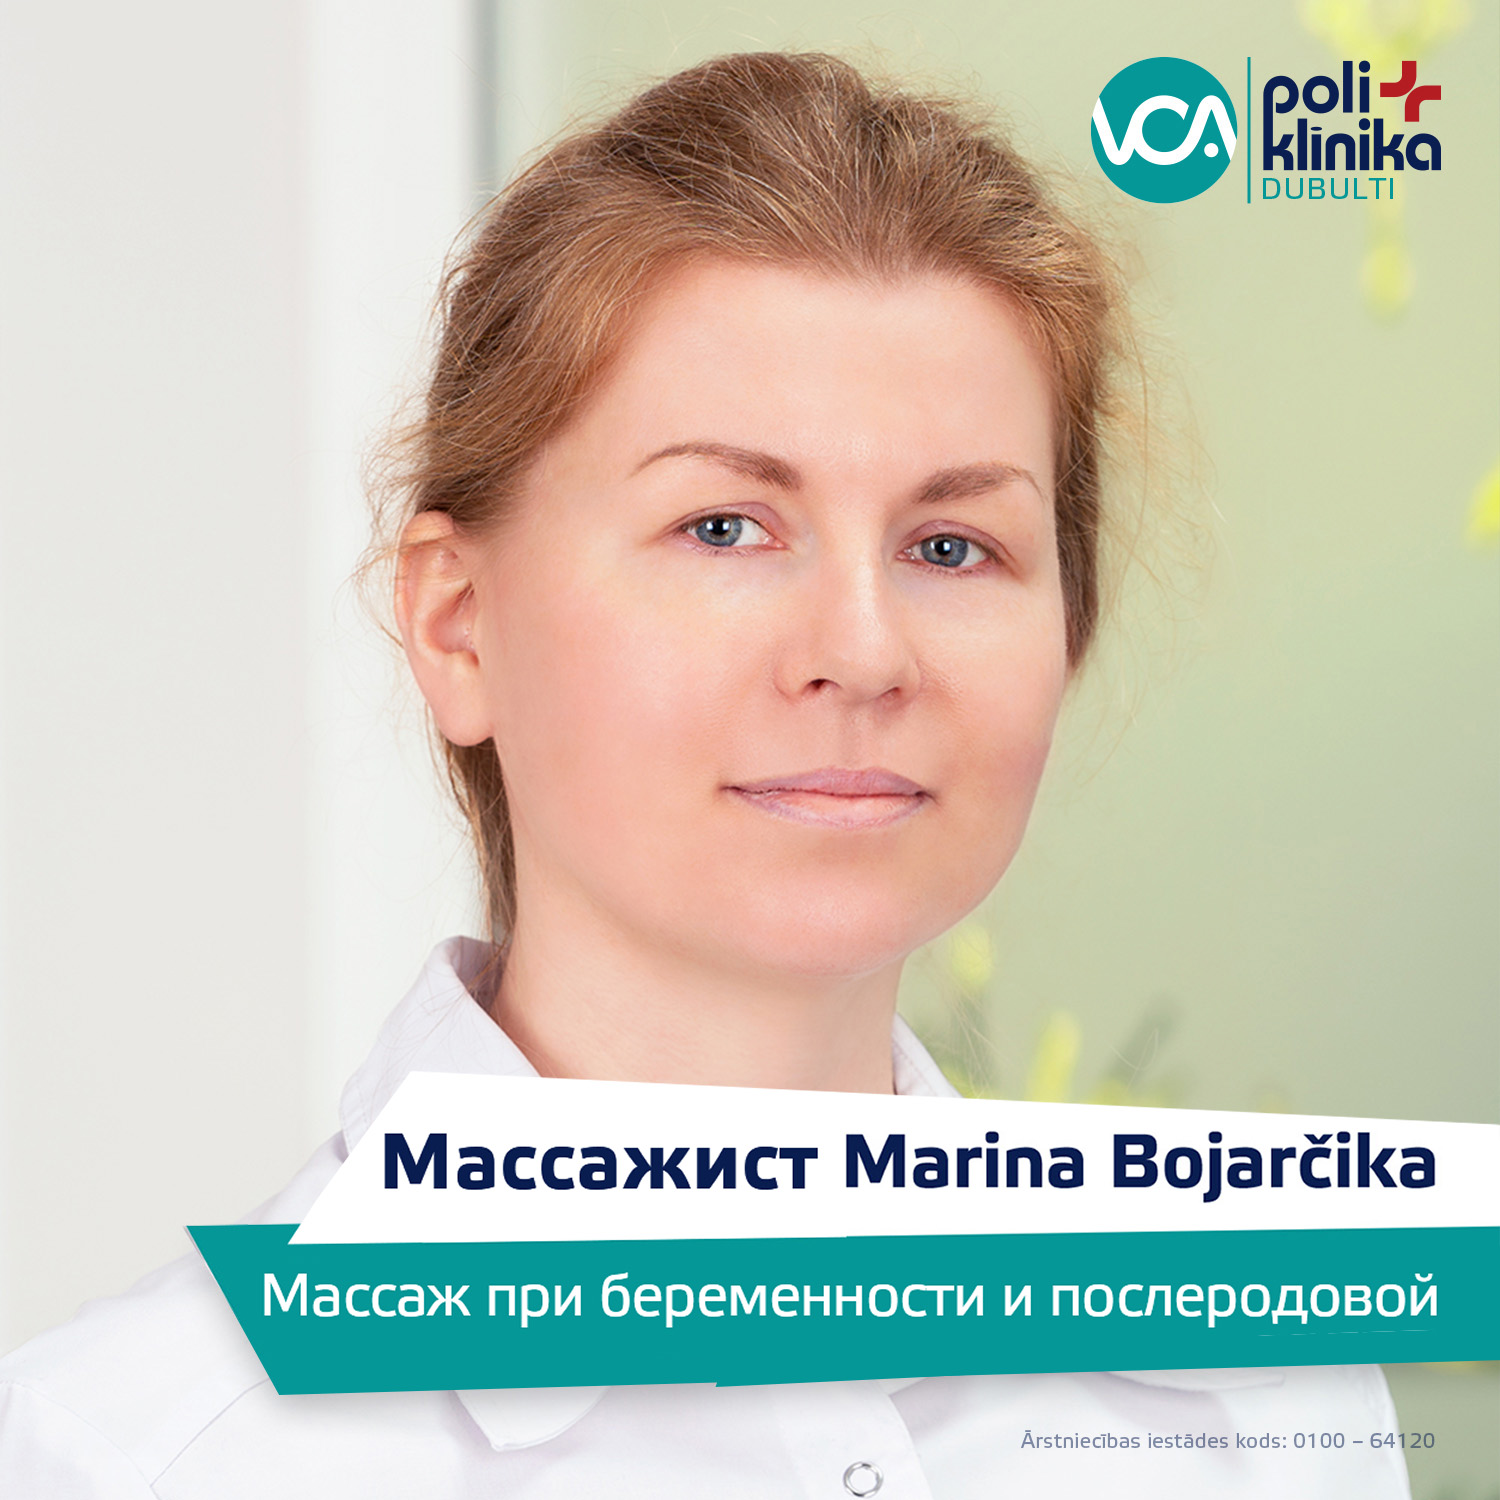 VCA poliklīnika Dubulti - Masiere Marina Bojarčika